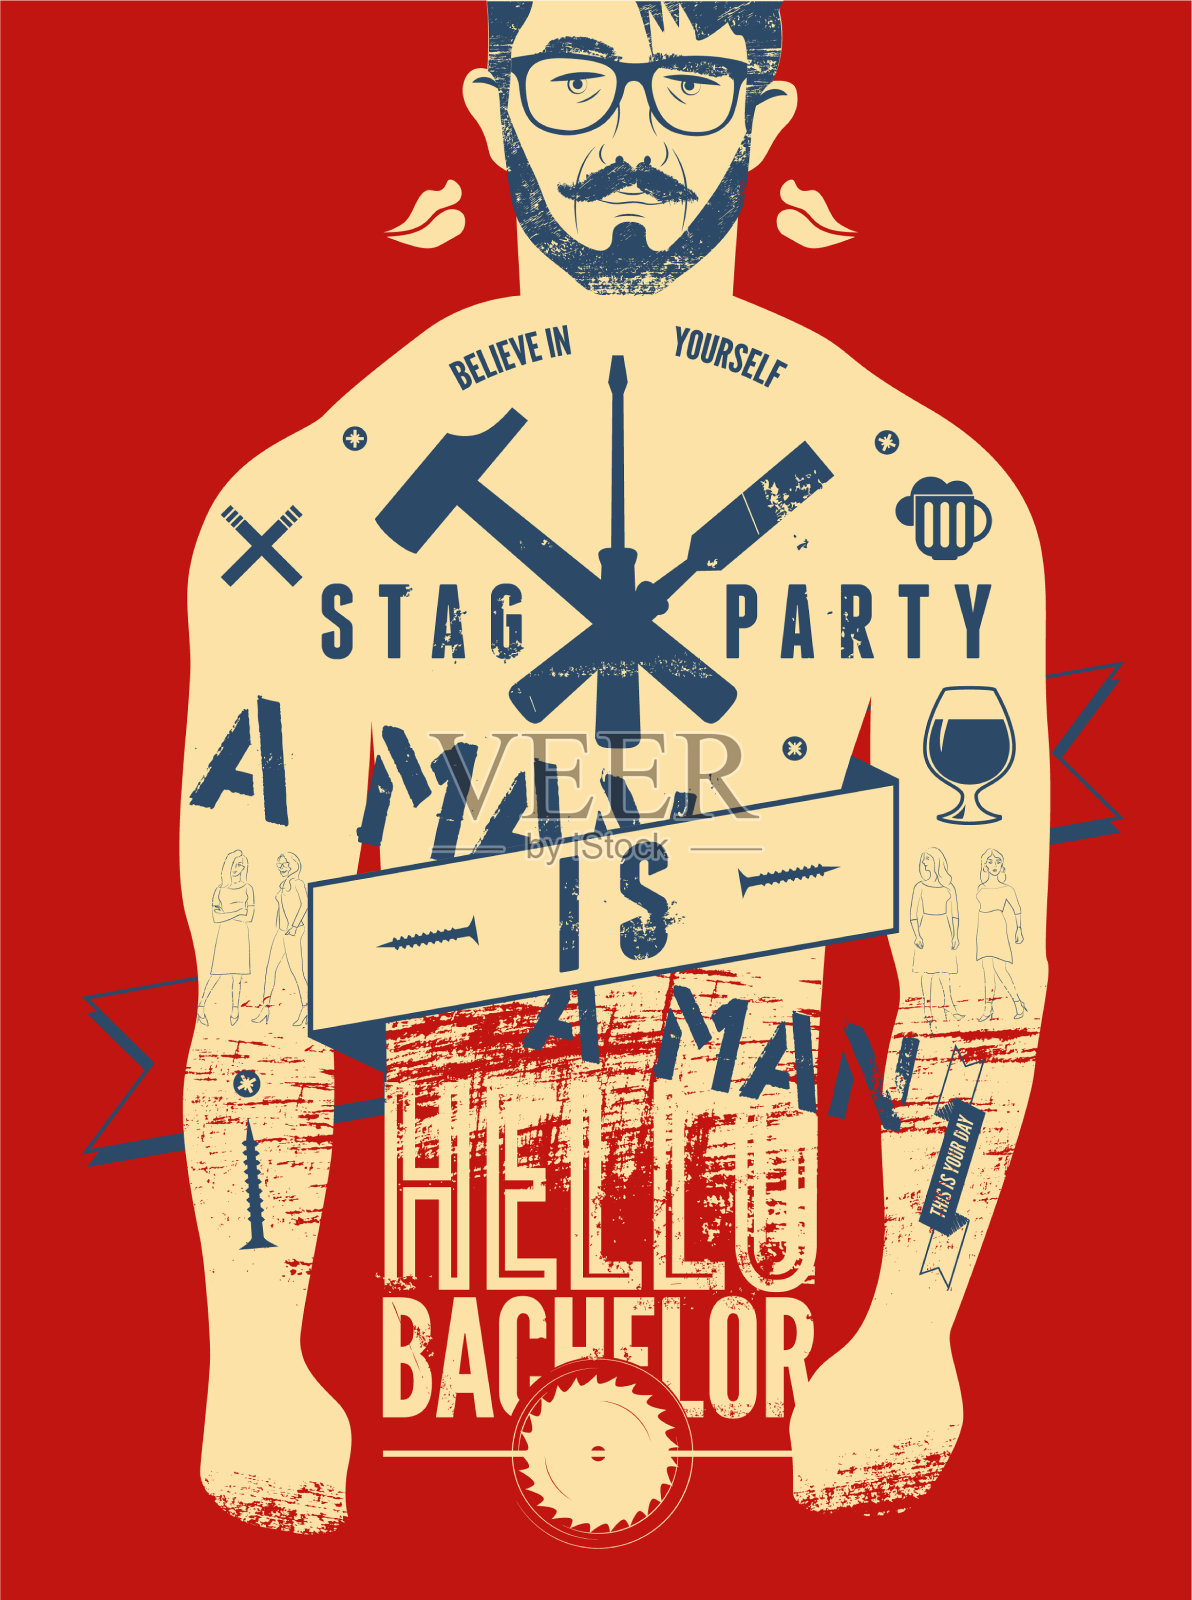 Stag party排印海报纹身男人身体设计模板素材